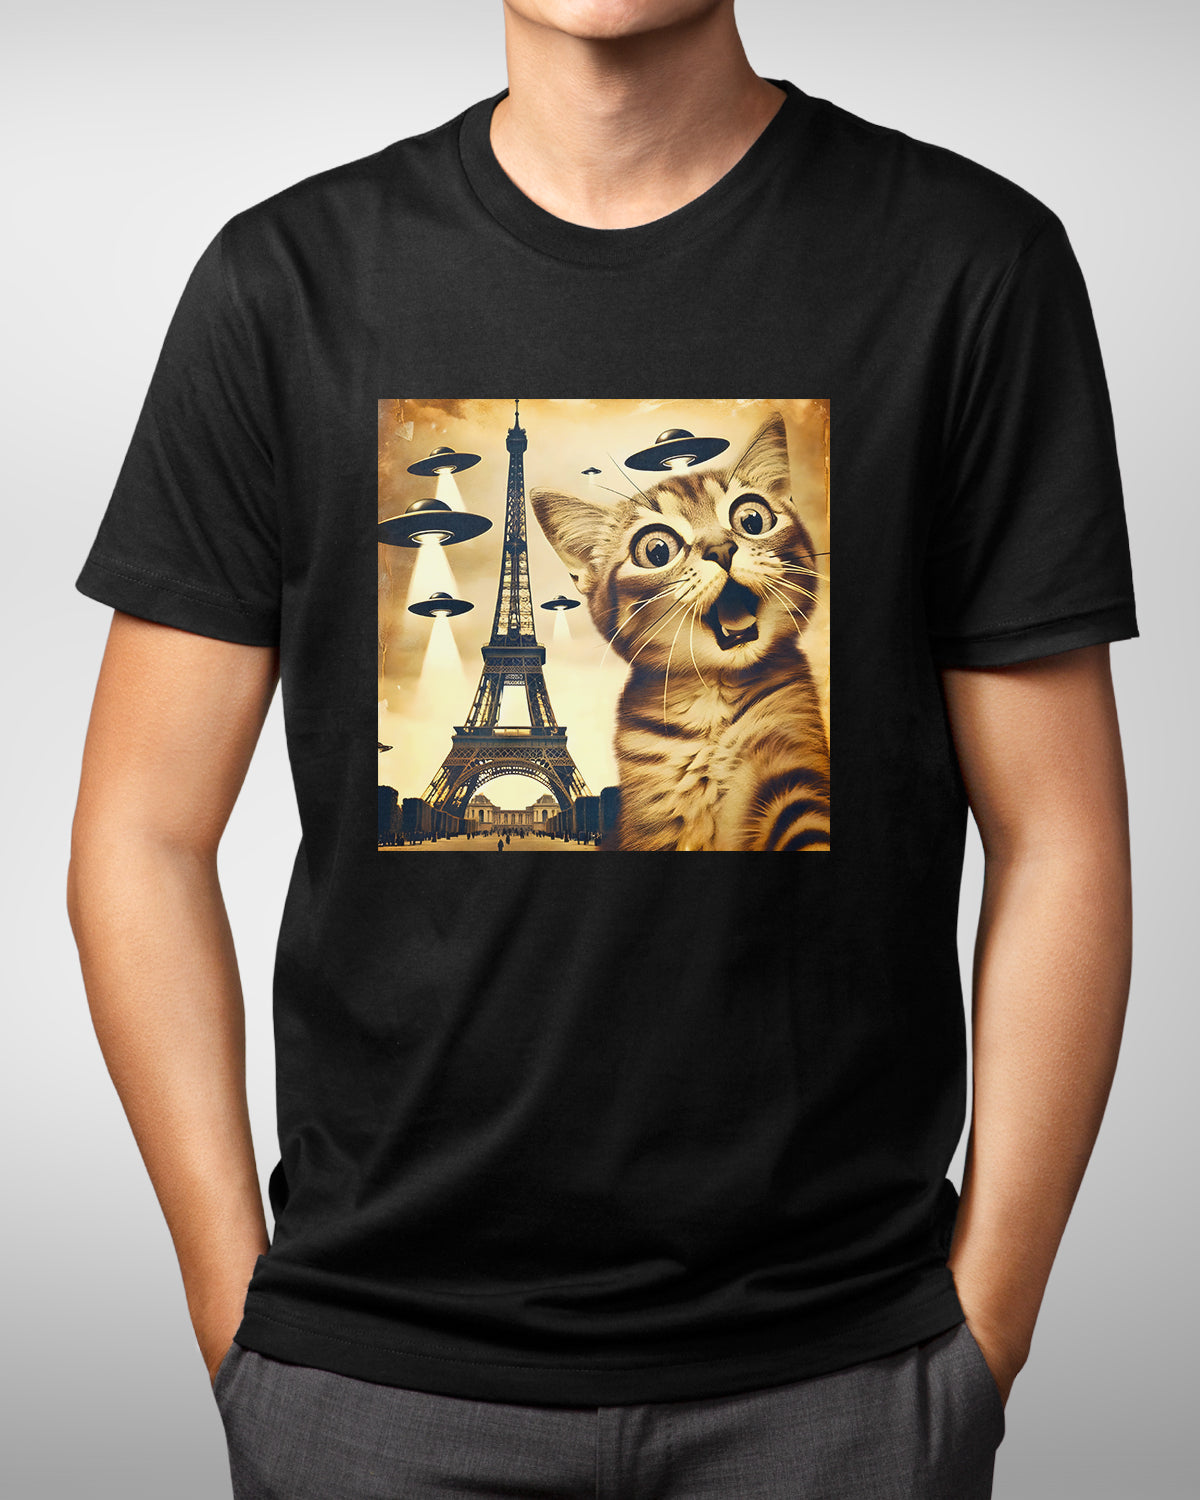 Funny Cat Selfie with UFOs Shirt, Eiffel Tower Parisian Cat, Alien Invasion Tee, UFO Believer Tee